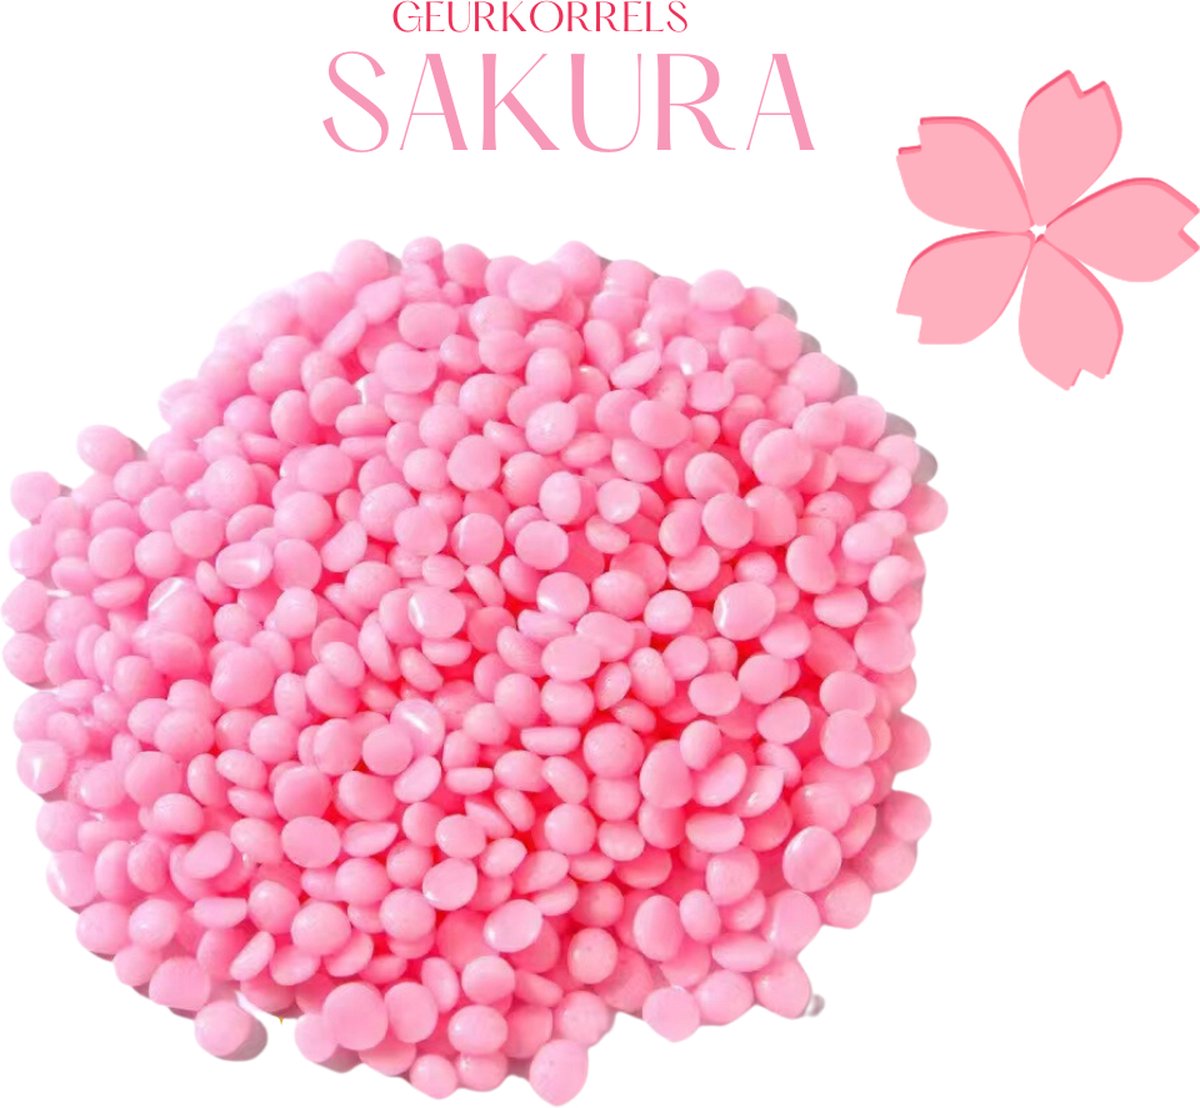 Fruitige Geurkorrels Sakura - geurkorrels stofzuiger - geurparels - geurbooster - inclusief organzakje! - Wehl Commerce